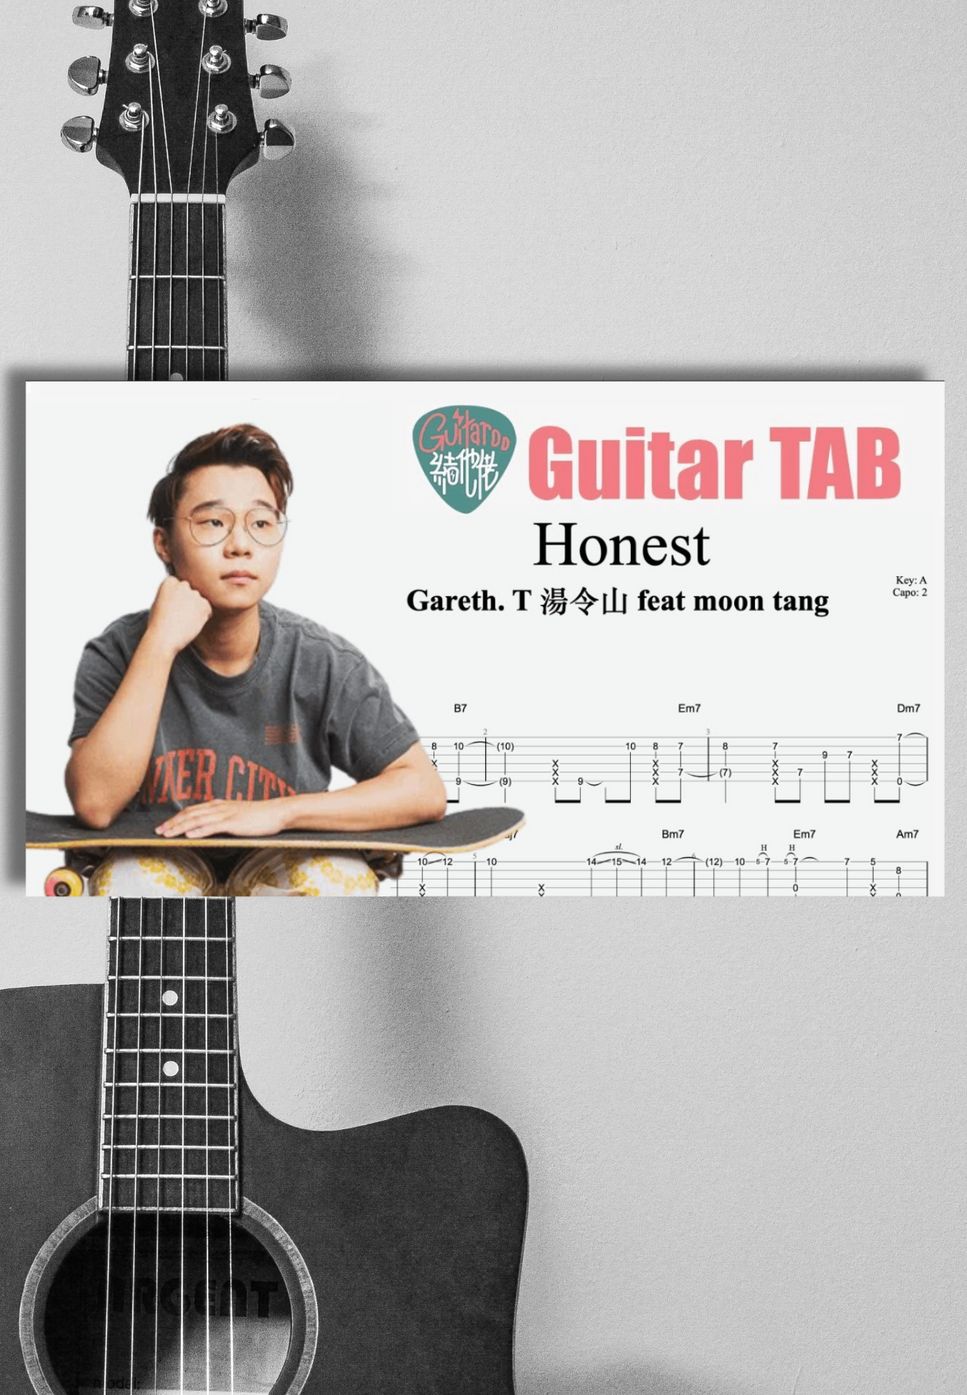 Gareth.T 湯令山 - Honest by Guitaroohk